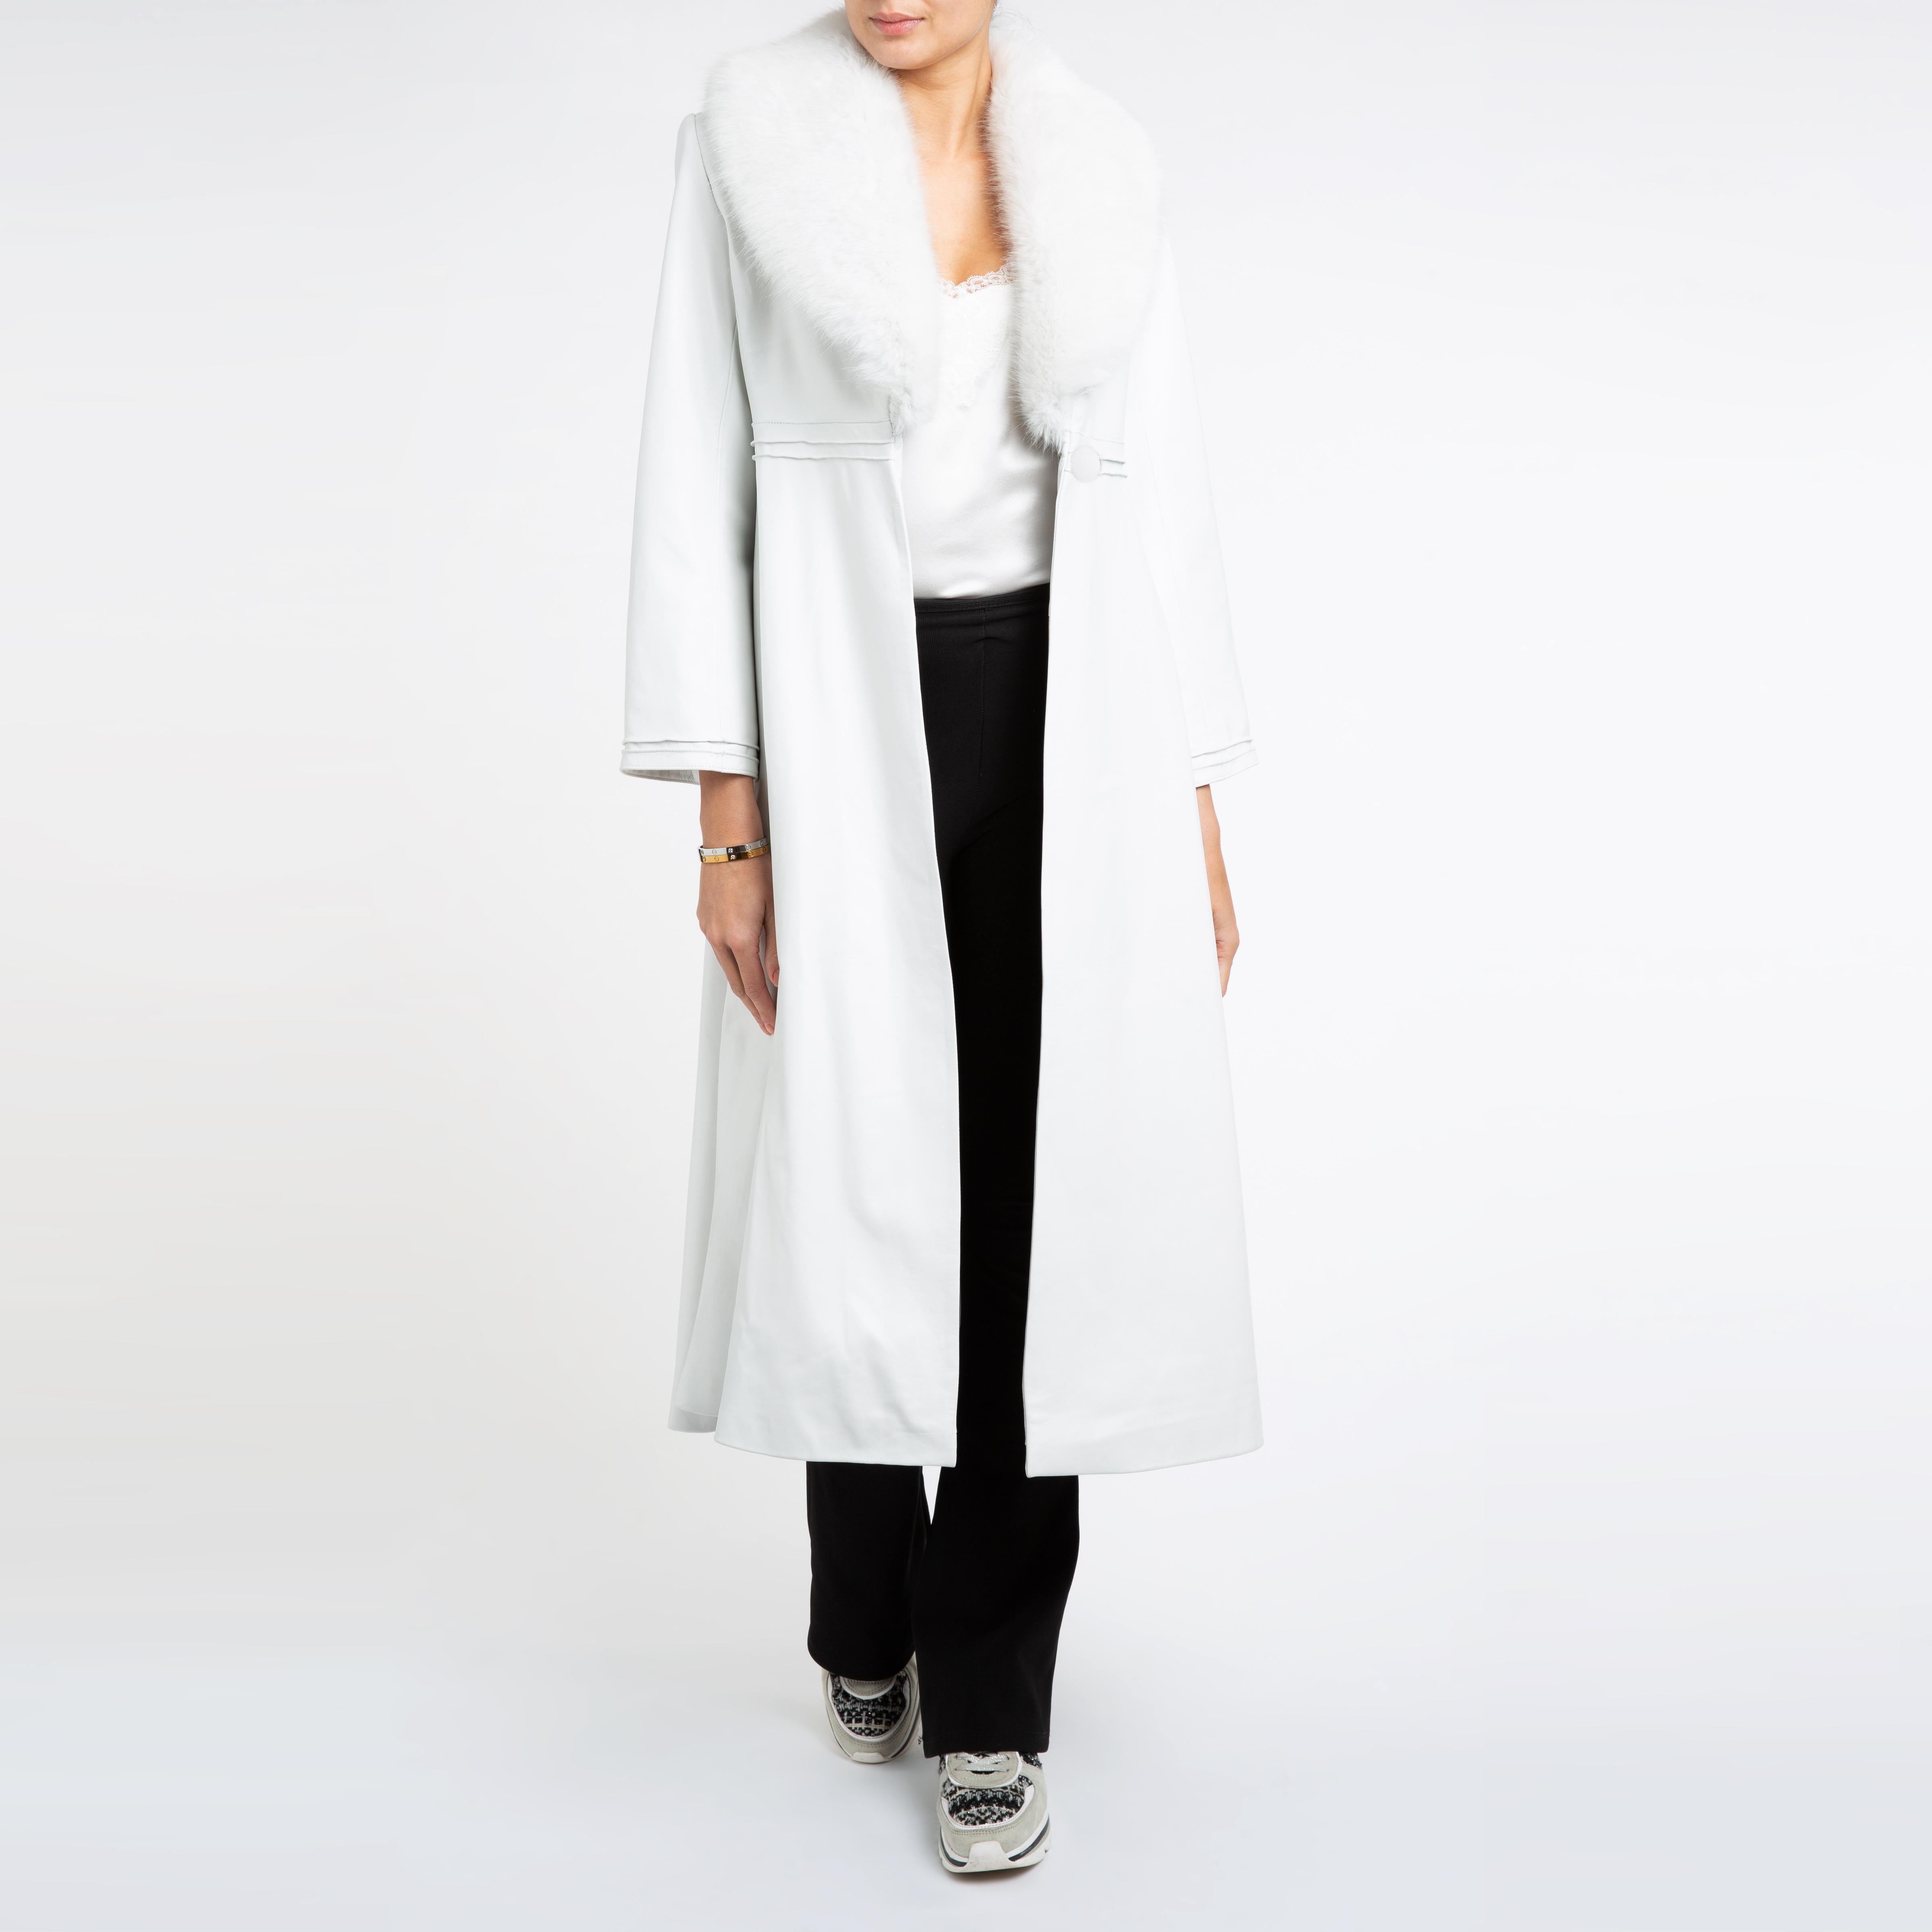 Verheyen London Edward Leather Coat in White with Faux Fur - Size uk 8  For Sale 4